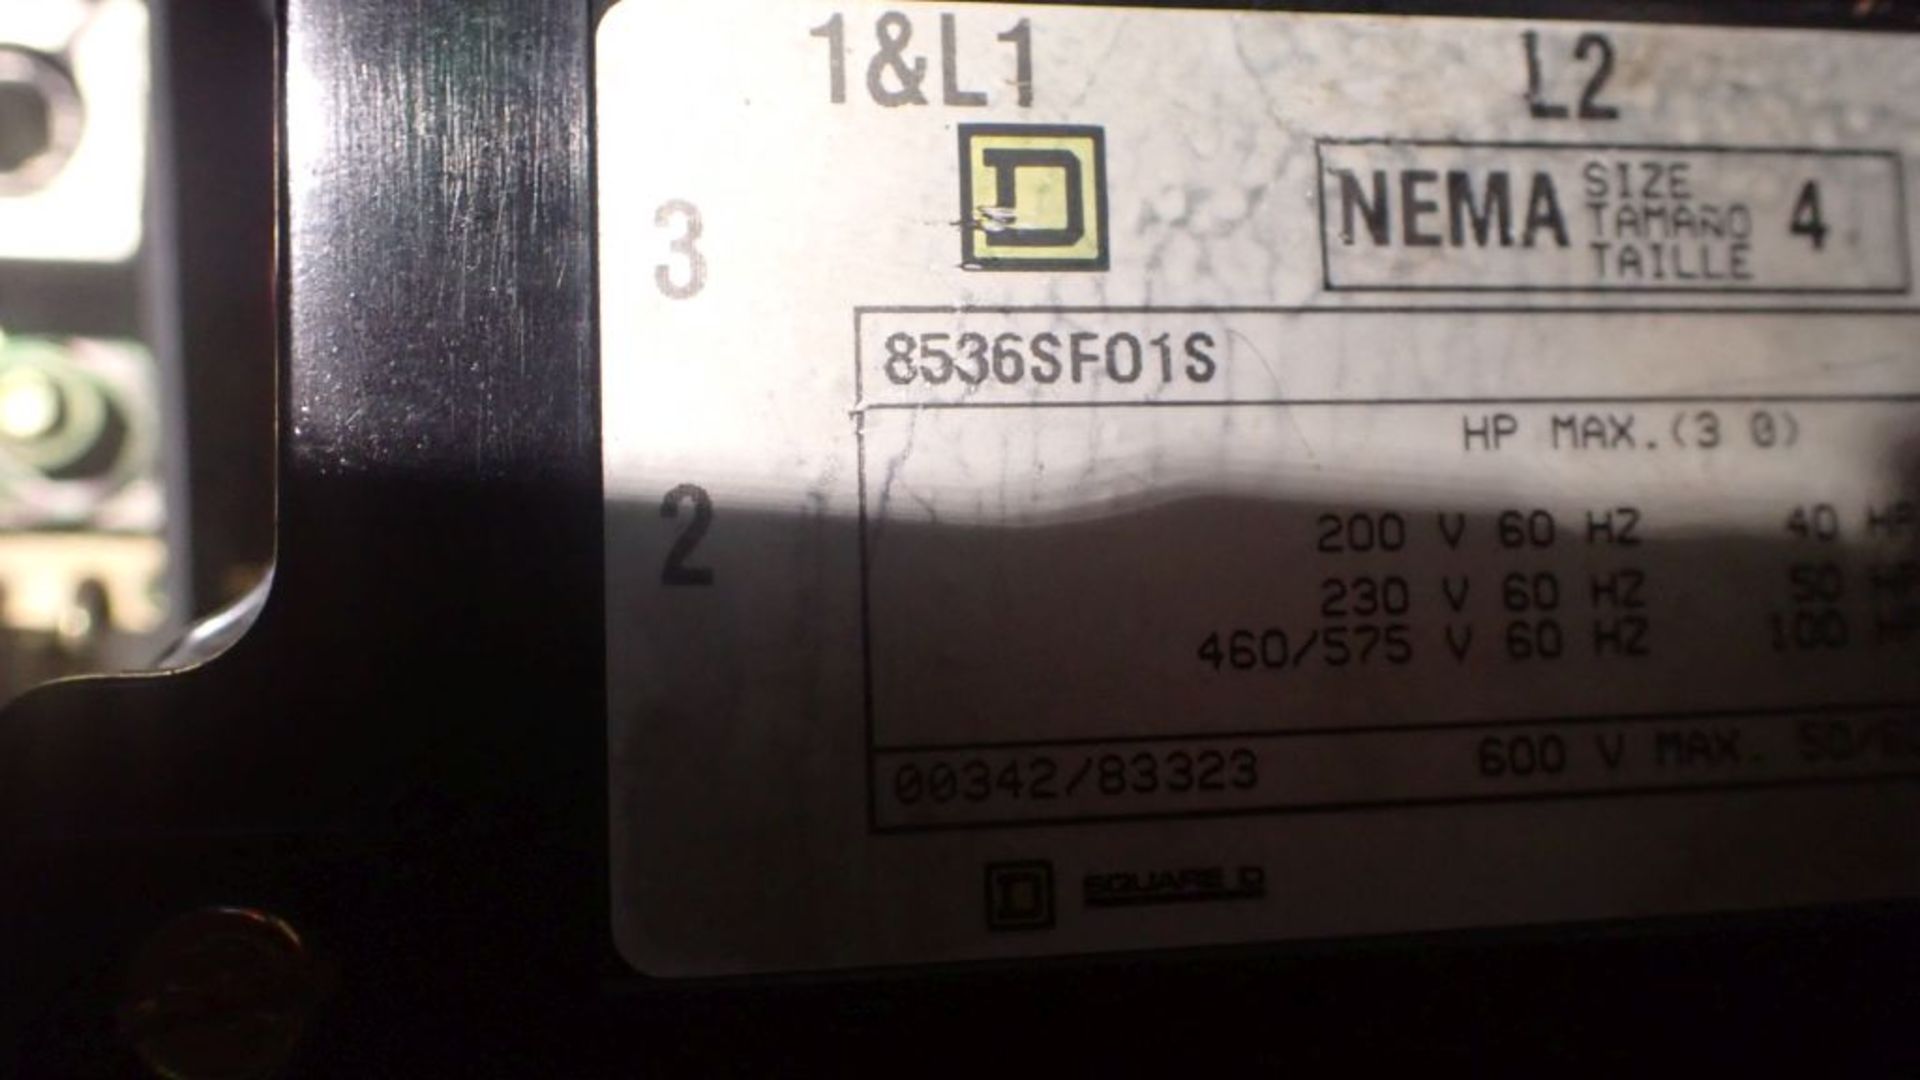 Square D Model 16 6-Section MCC | Includes: Nema Size 4, Cat No. 8536SFORS, 100 HP Max, 460/575V; ( - Image 15 of 70